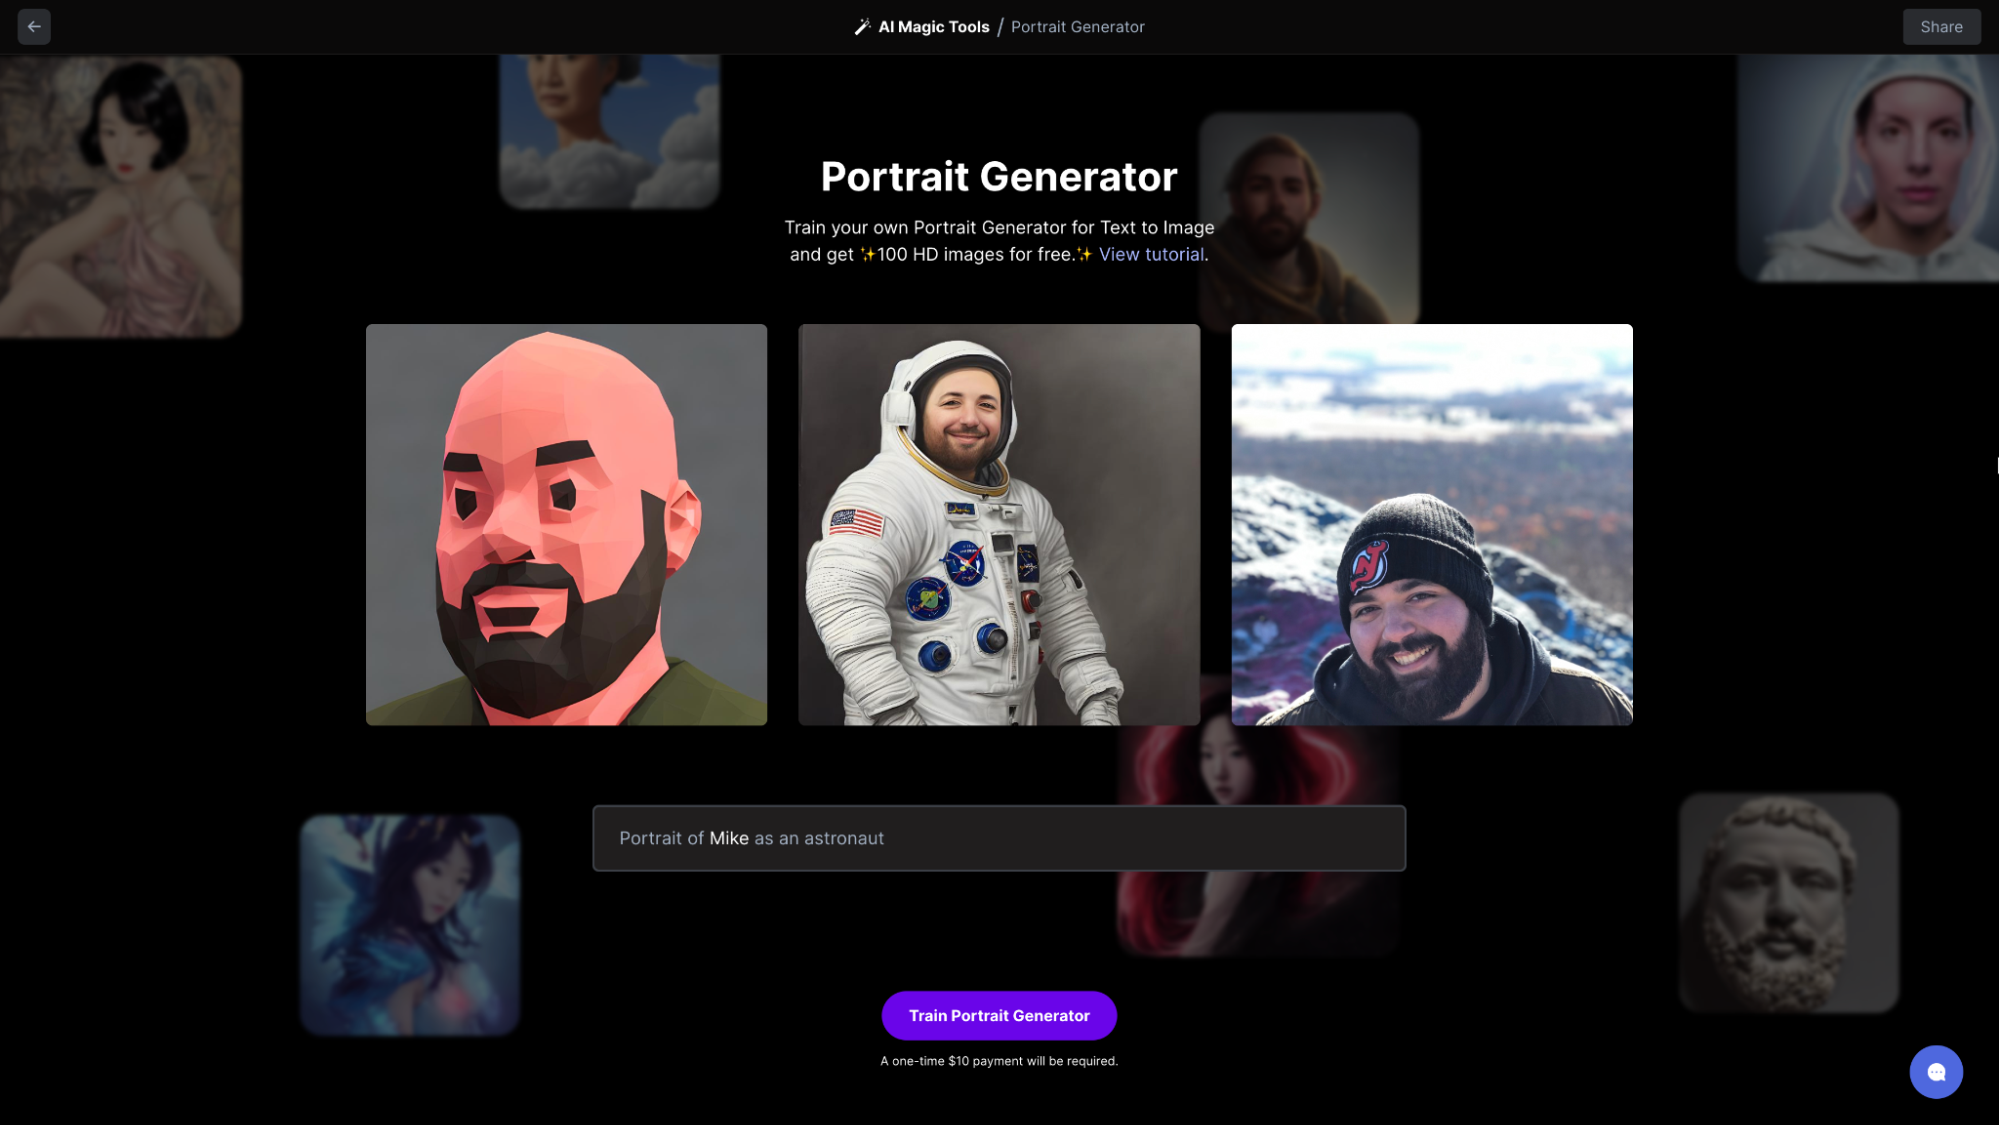 Train your AI Portrait Generator